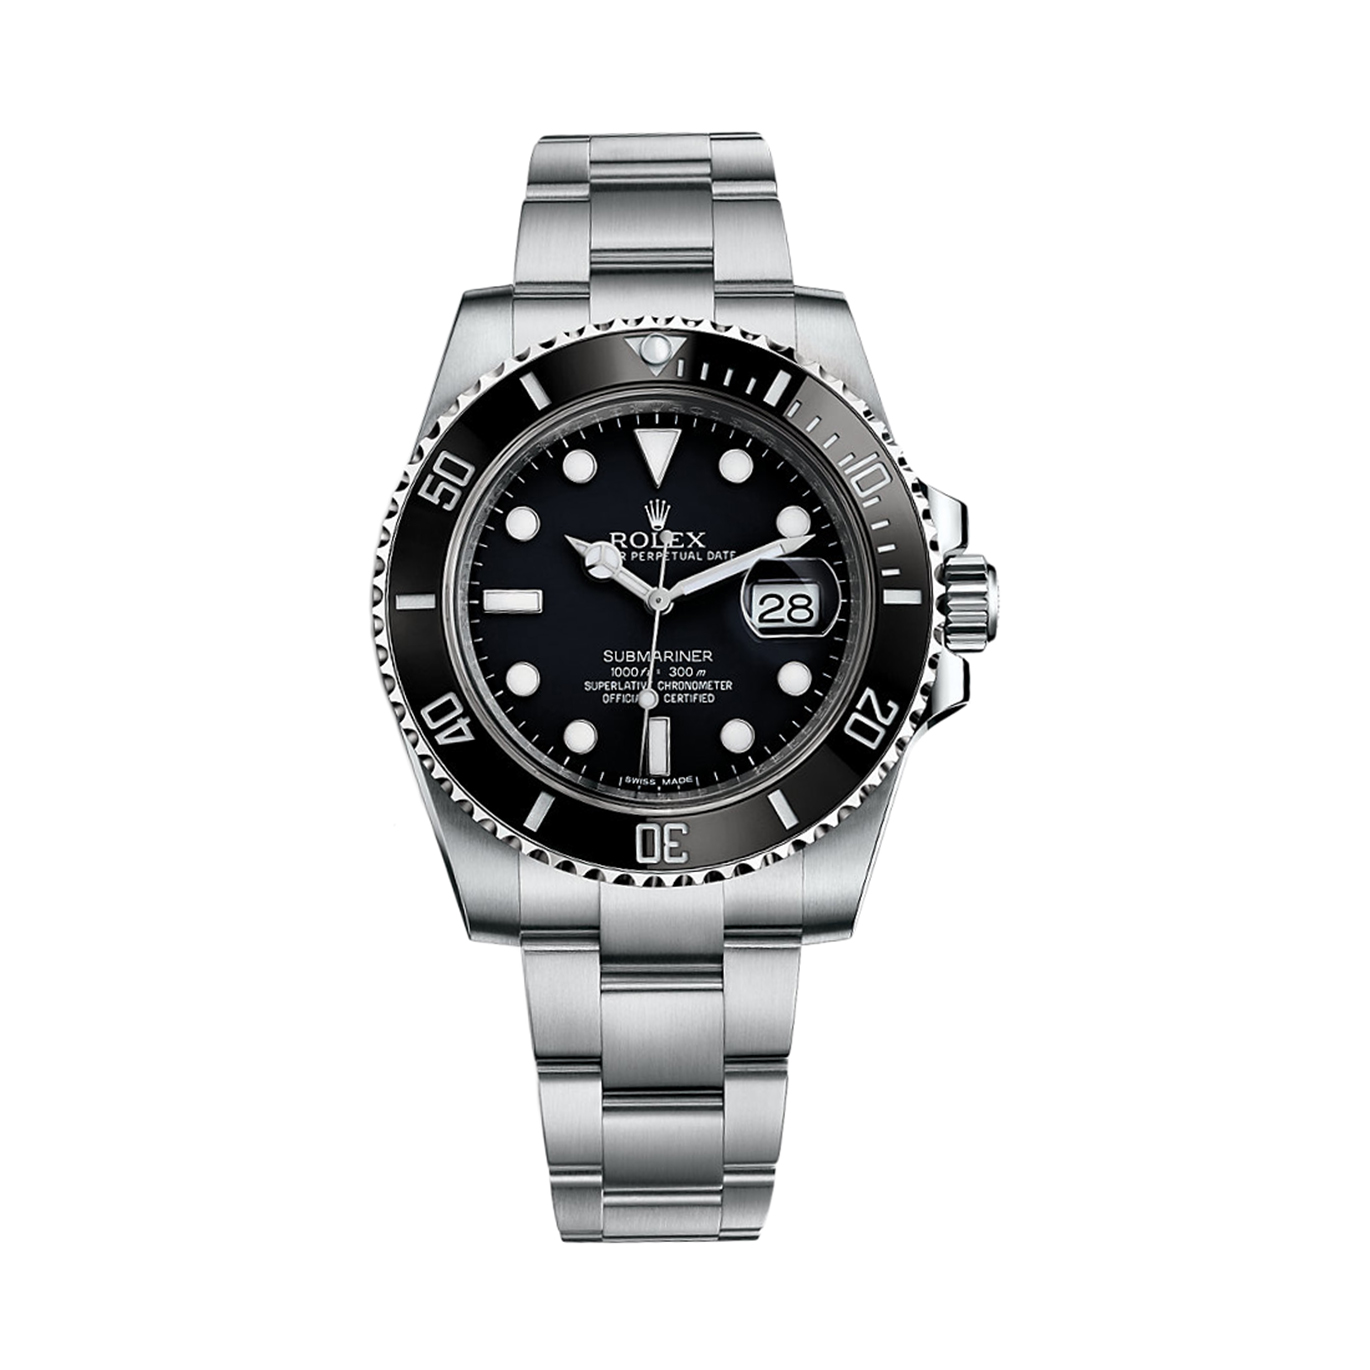 Submariner 116610LN Stainless Steel Watch (Black)